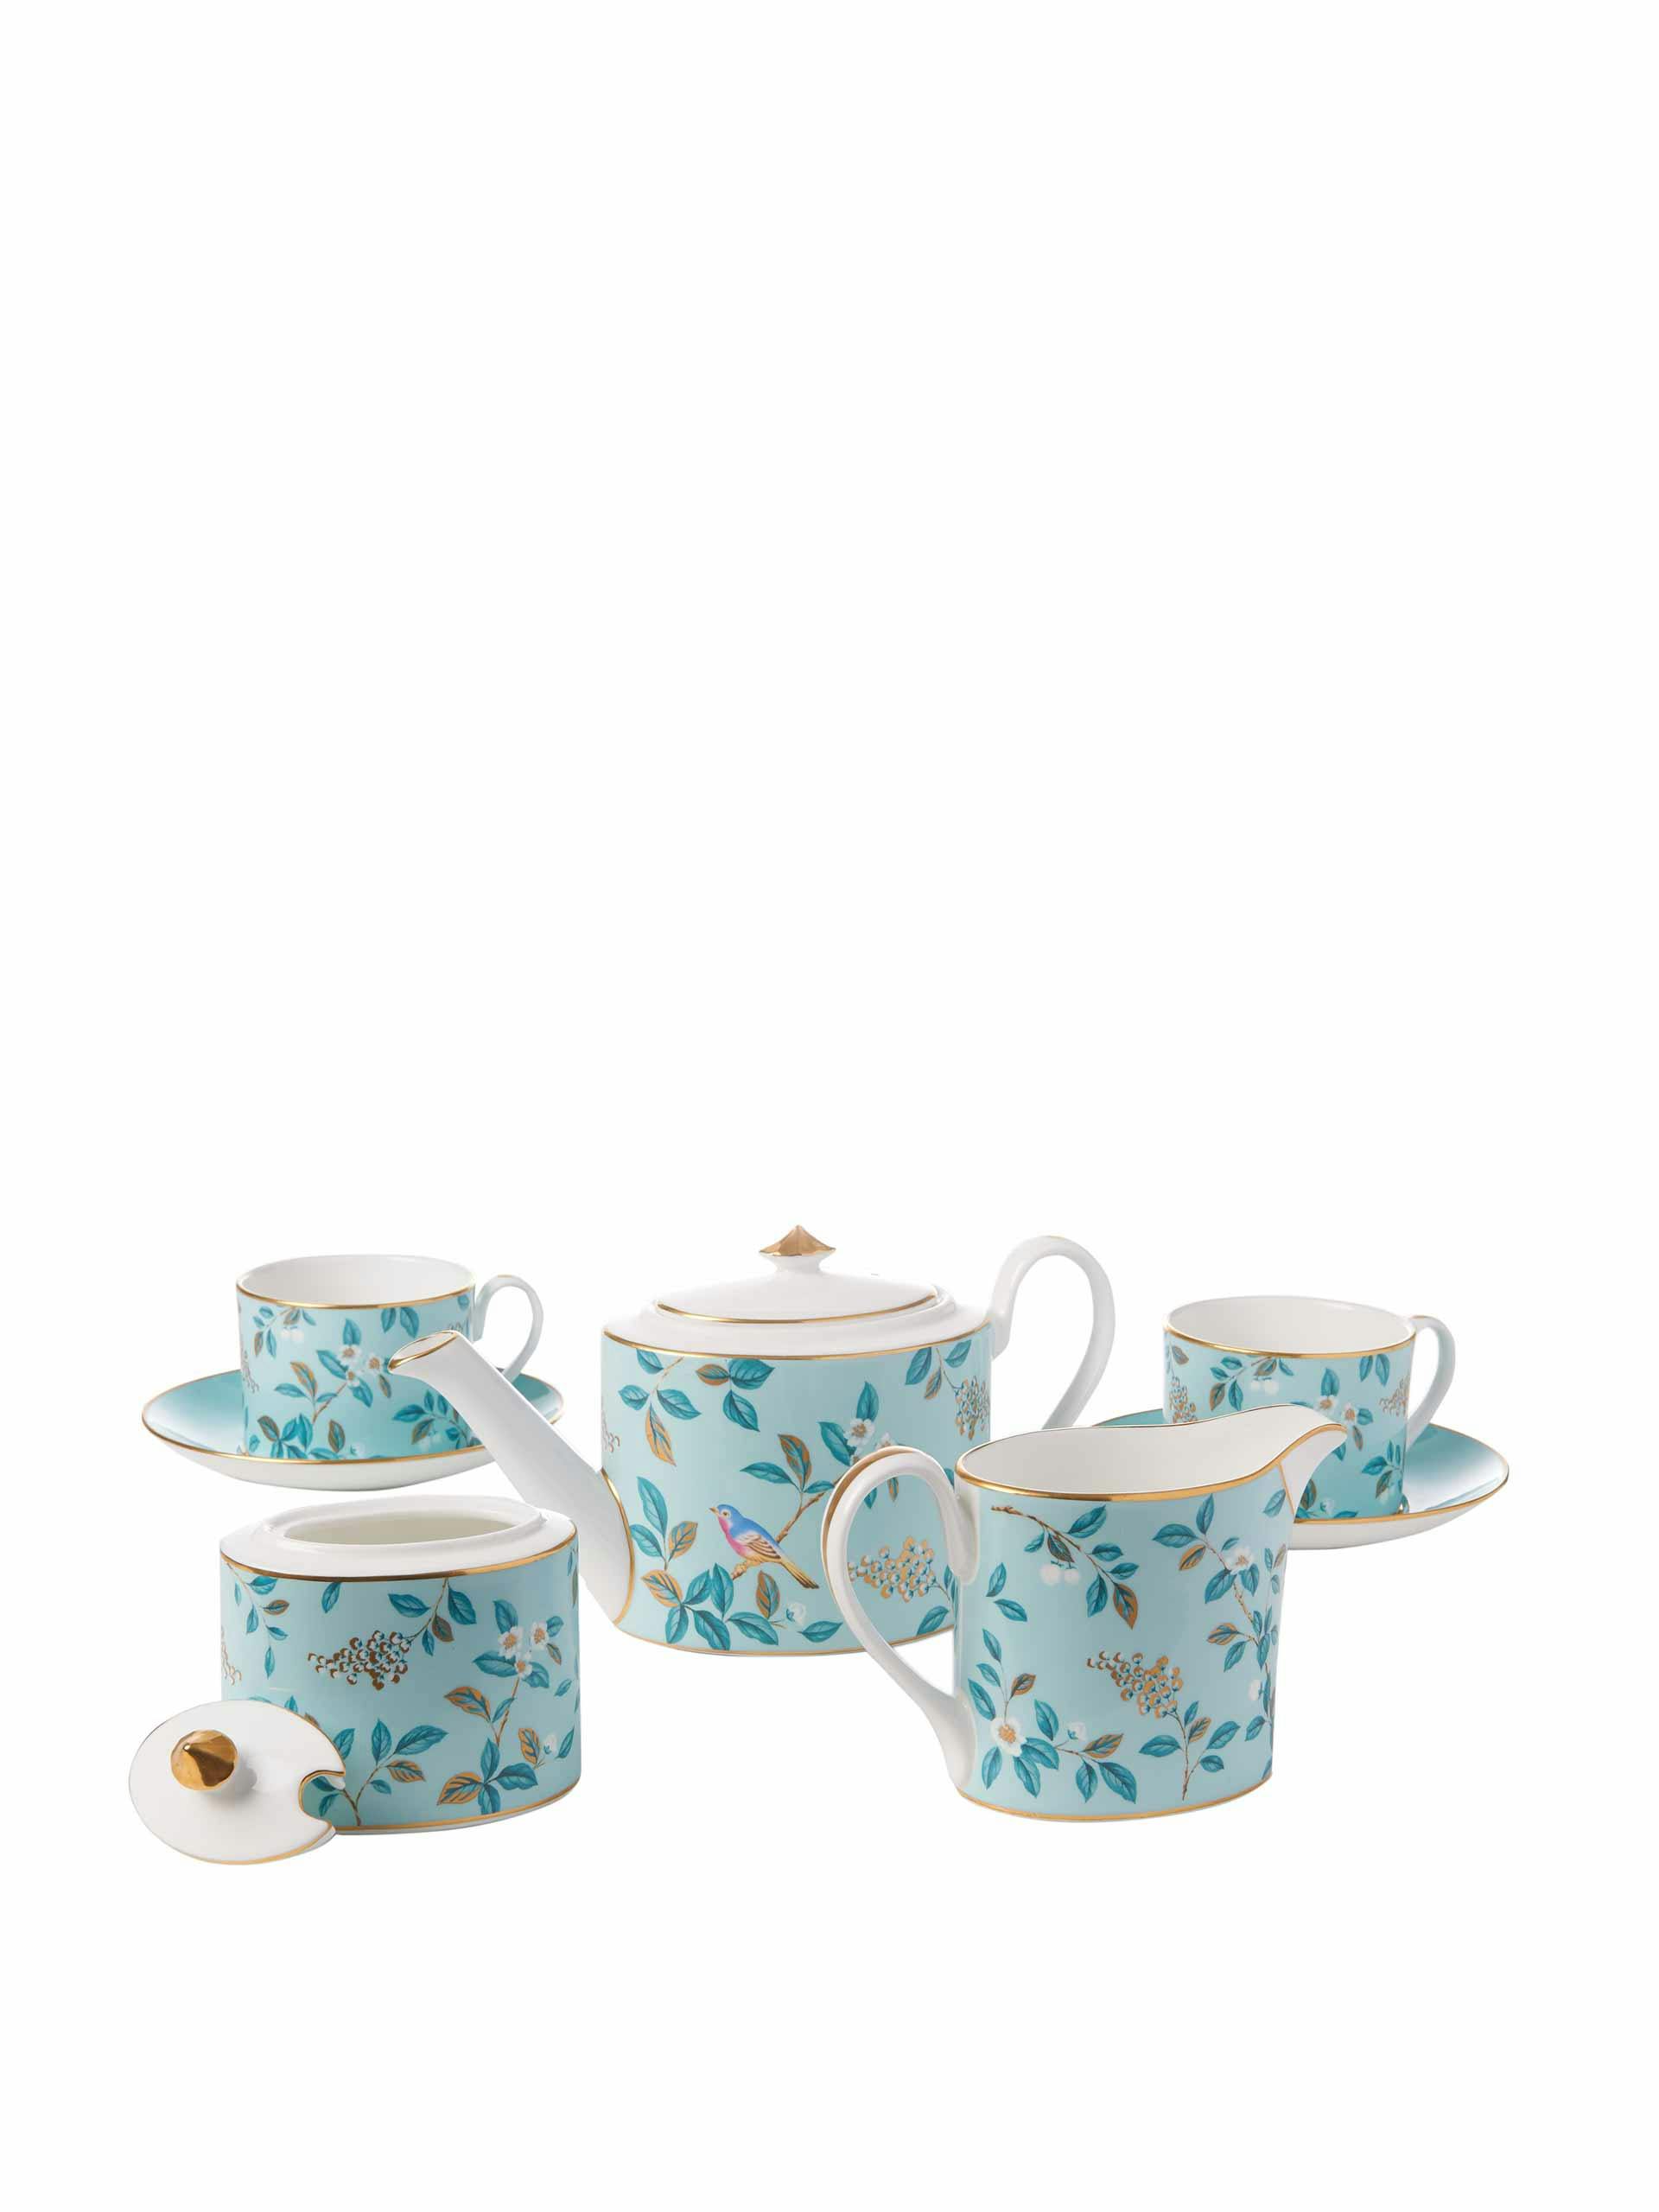 Camellia Tea for Two gift set